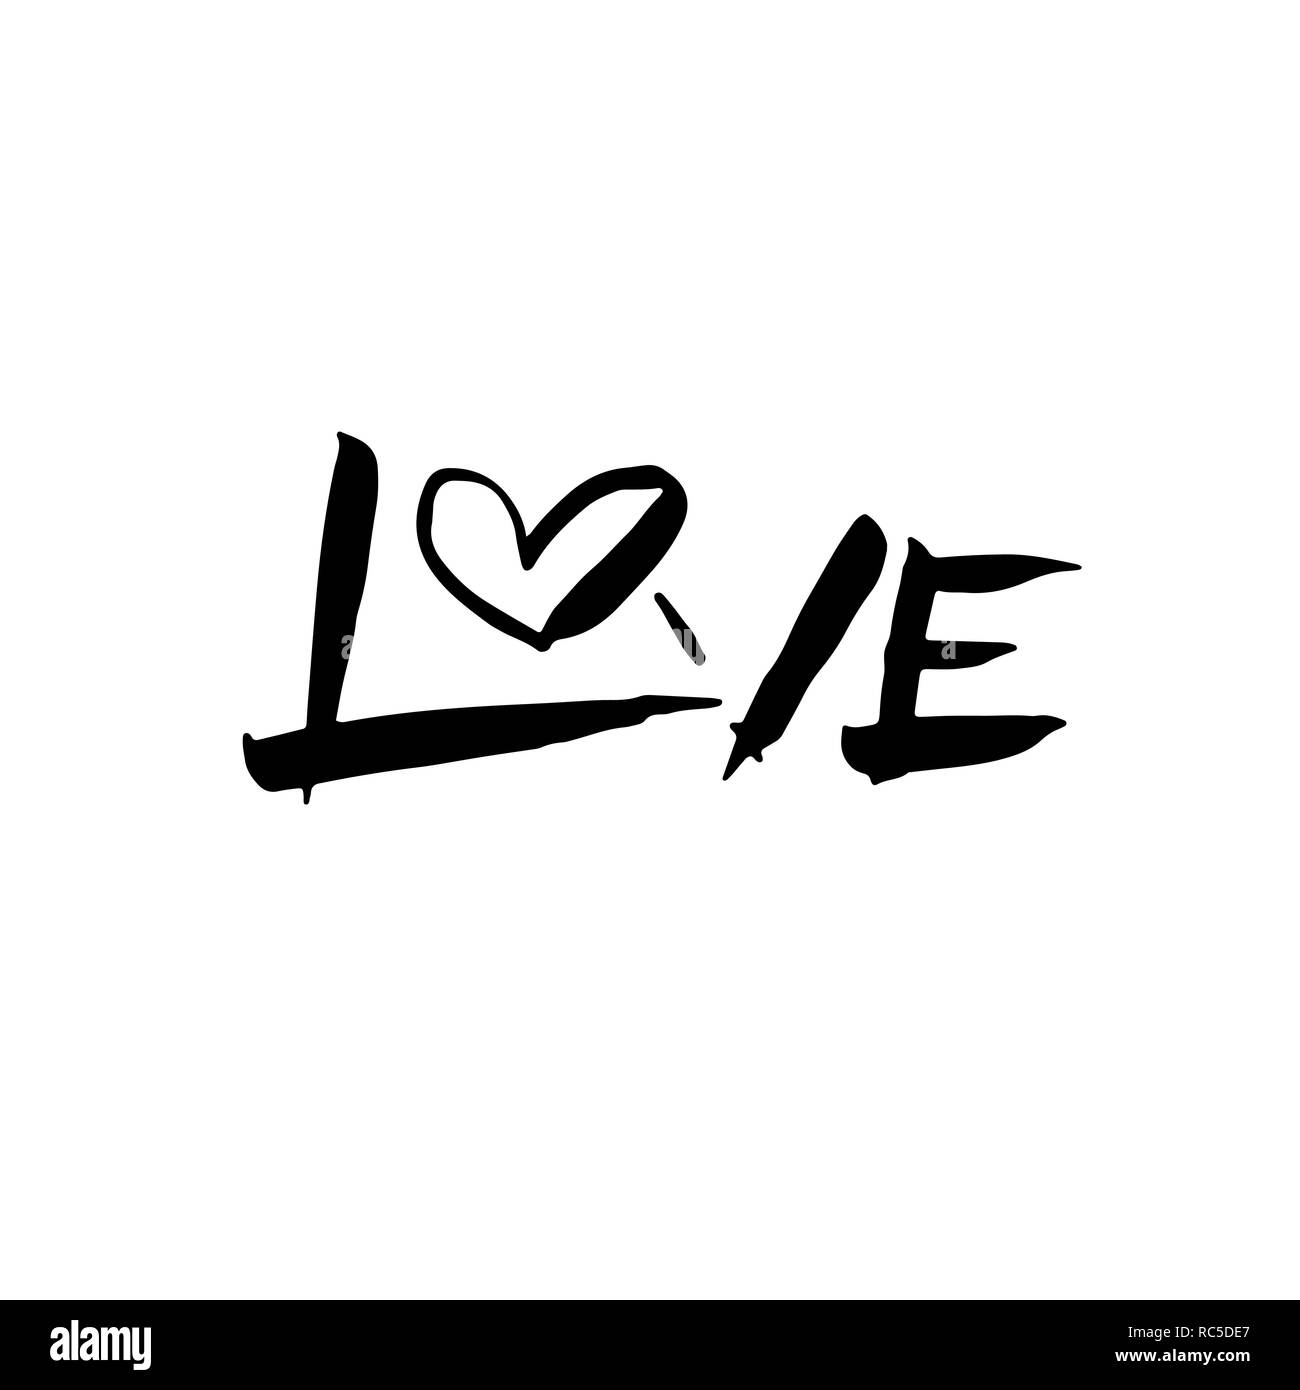 Love. Handdrawn calligraphy for Valentines day. Ink heart illustration. Modern dry brush lettering. Vector illustration. Stock Vector